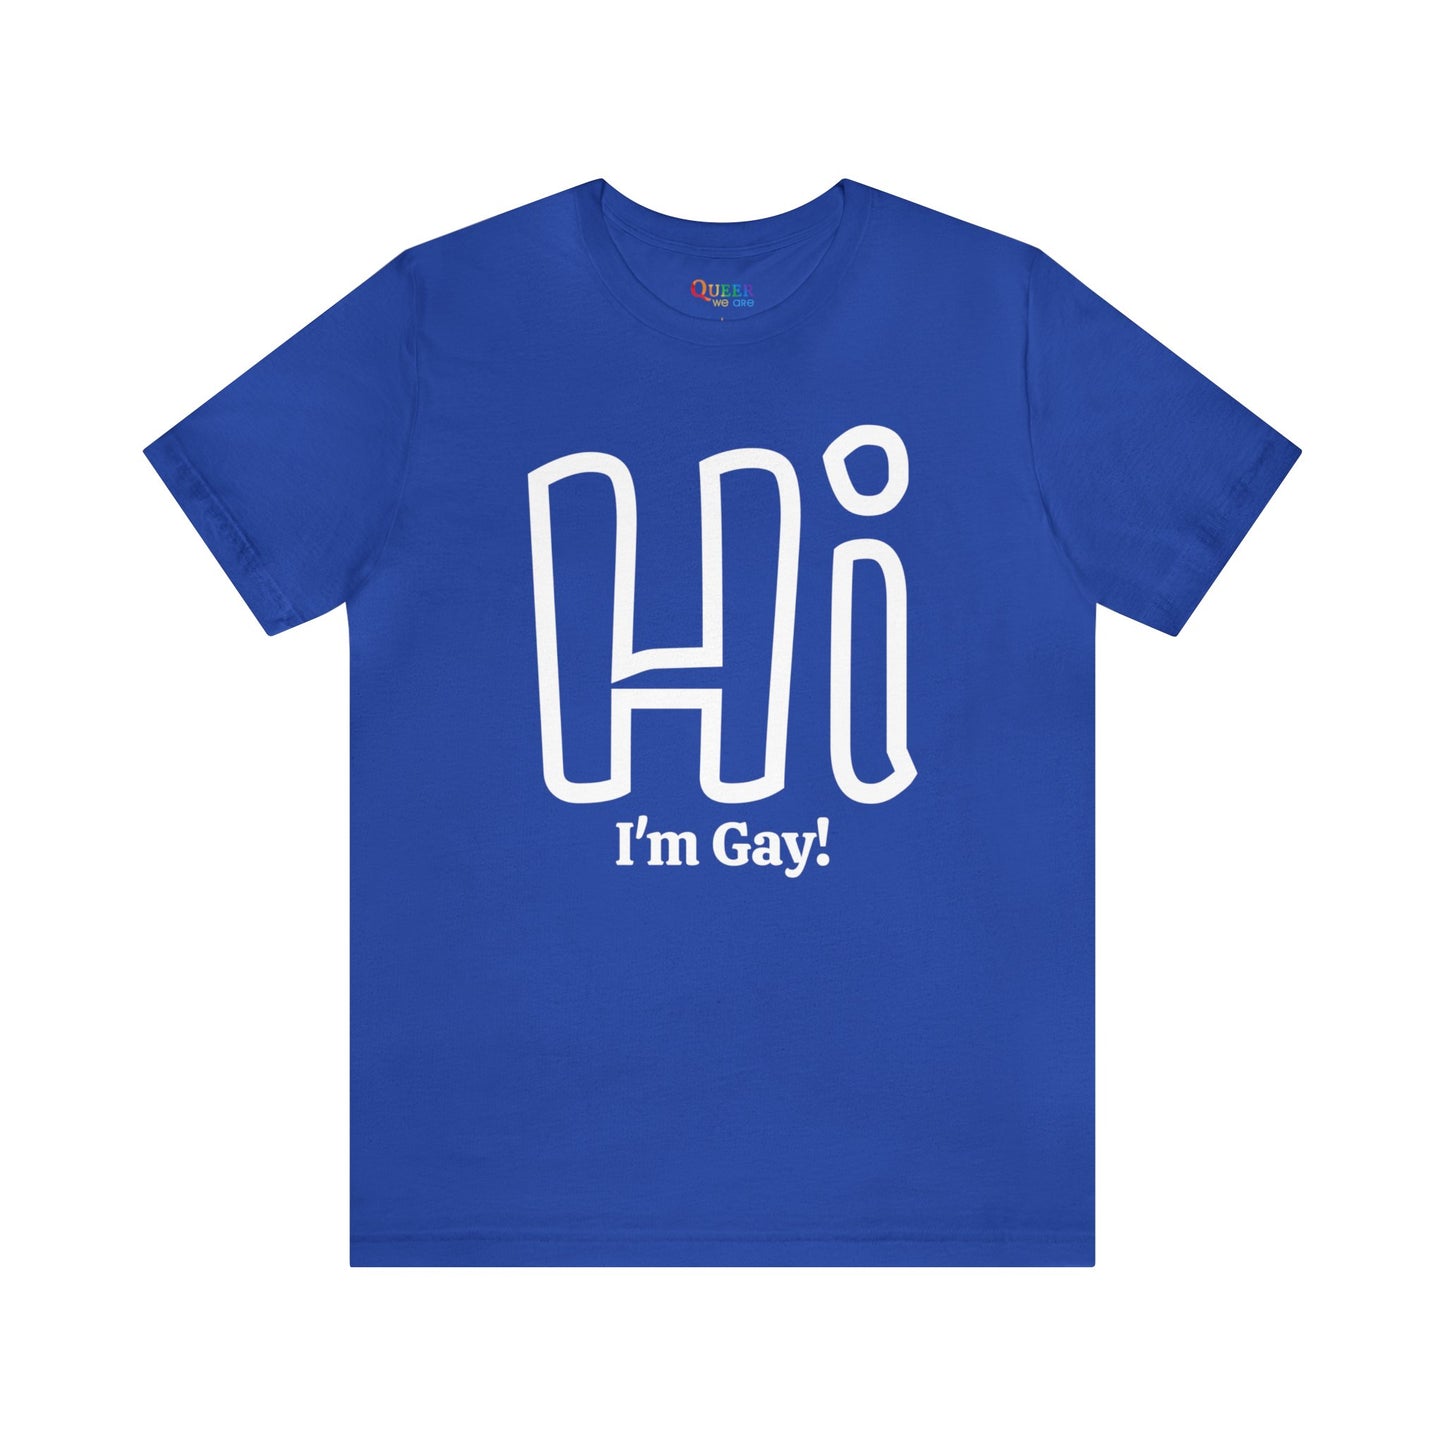 Hi I'm Gay Unisex Crew Neck T-shirt - Queer We Are Shop